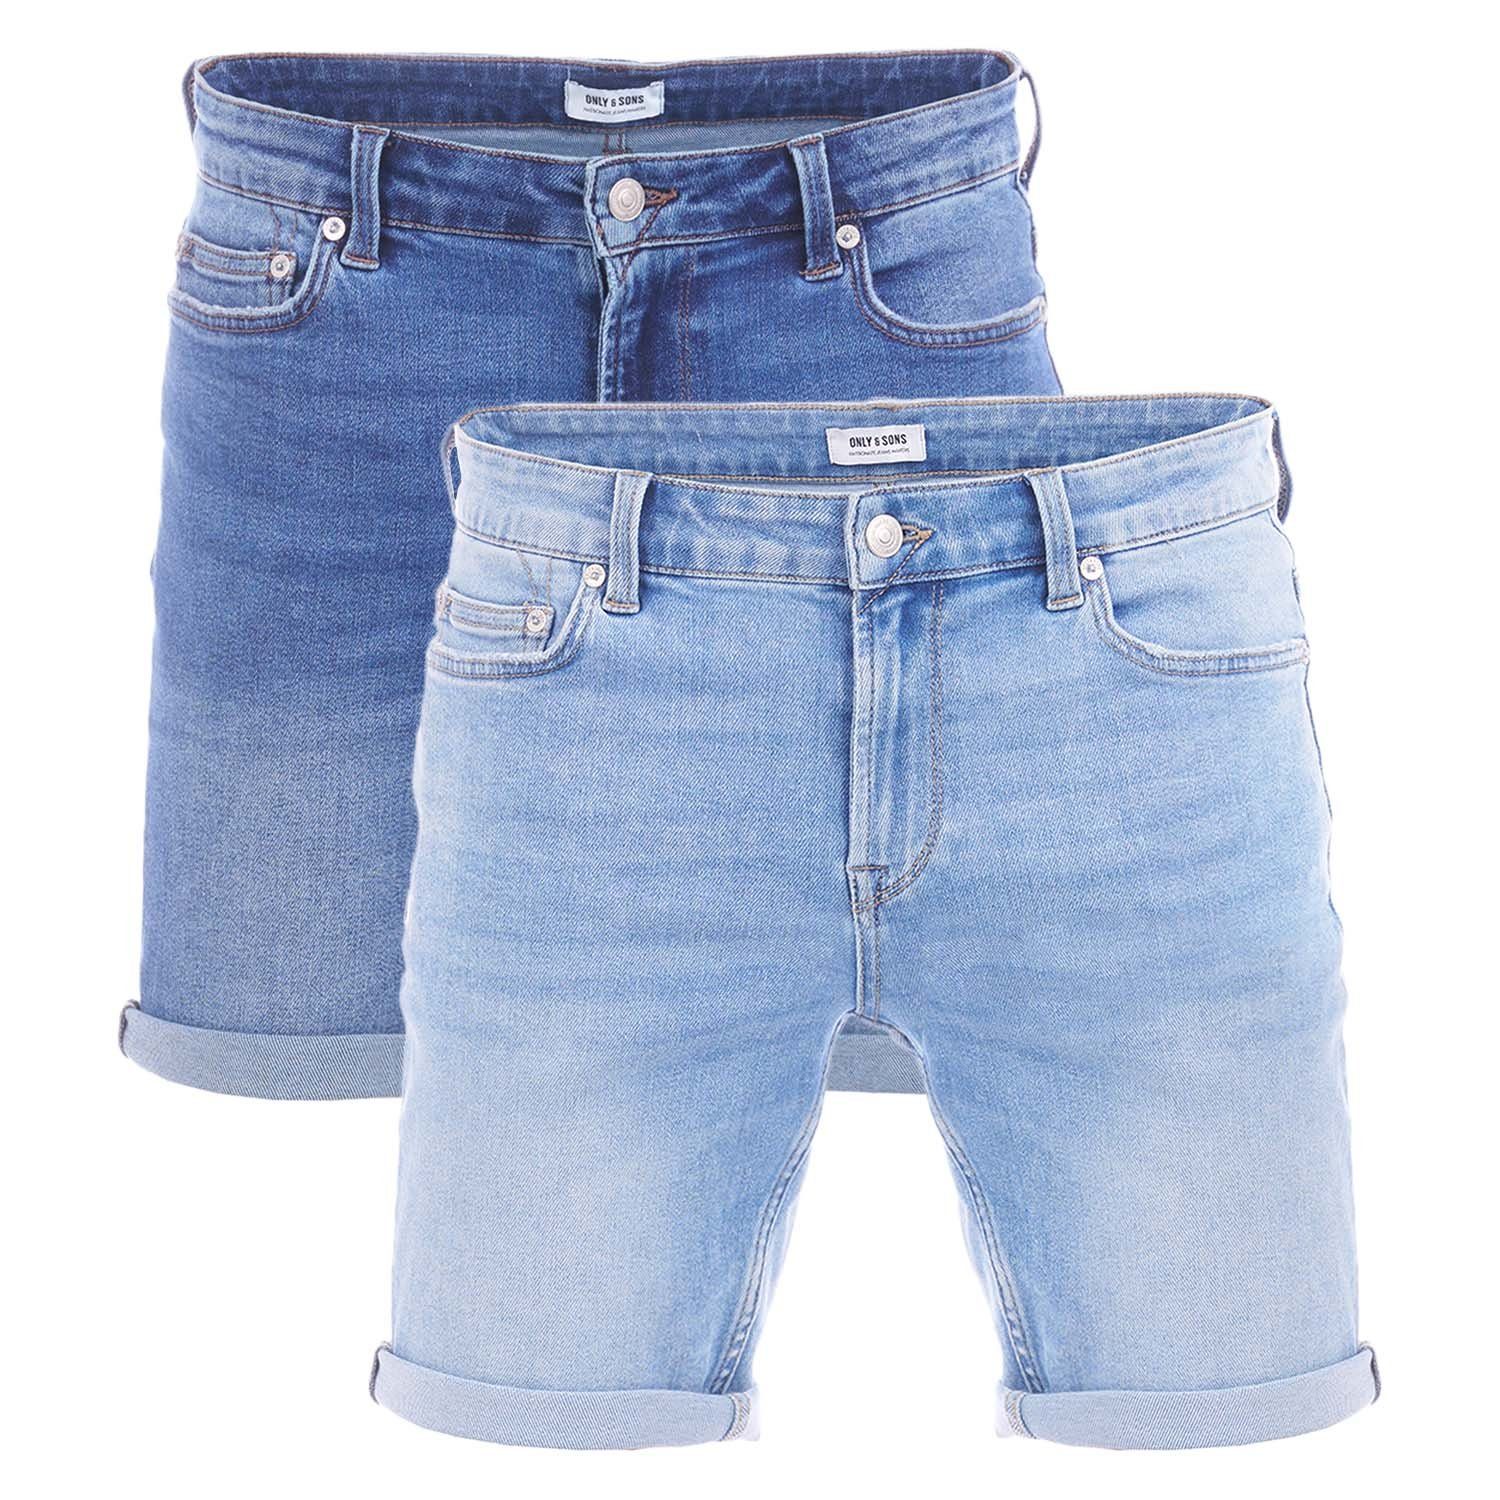 ONLY & SONS Jeansshorts Herren Shorts ONSPLY 2er Pack Regular Fit Bermudashorts mit Stretch Medium Blue / Light Blue (22029141)